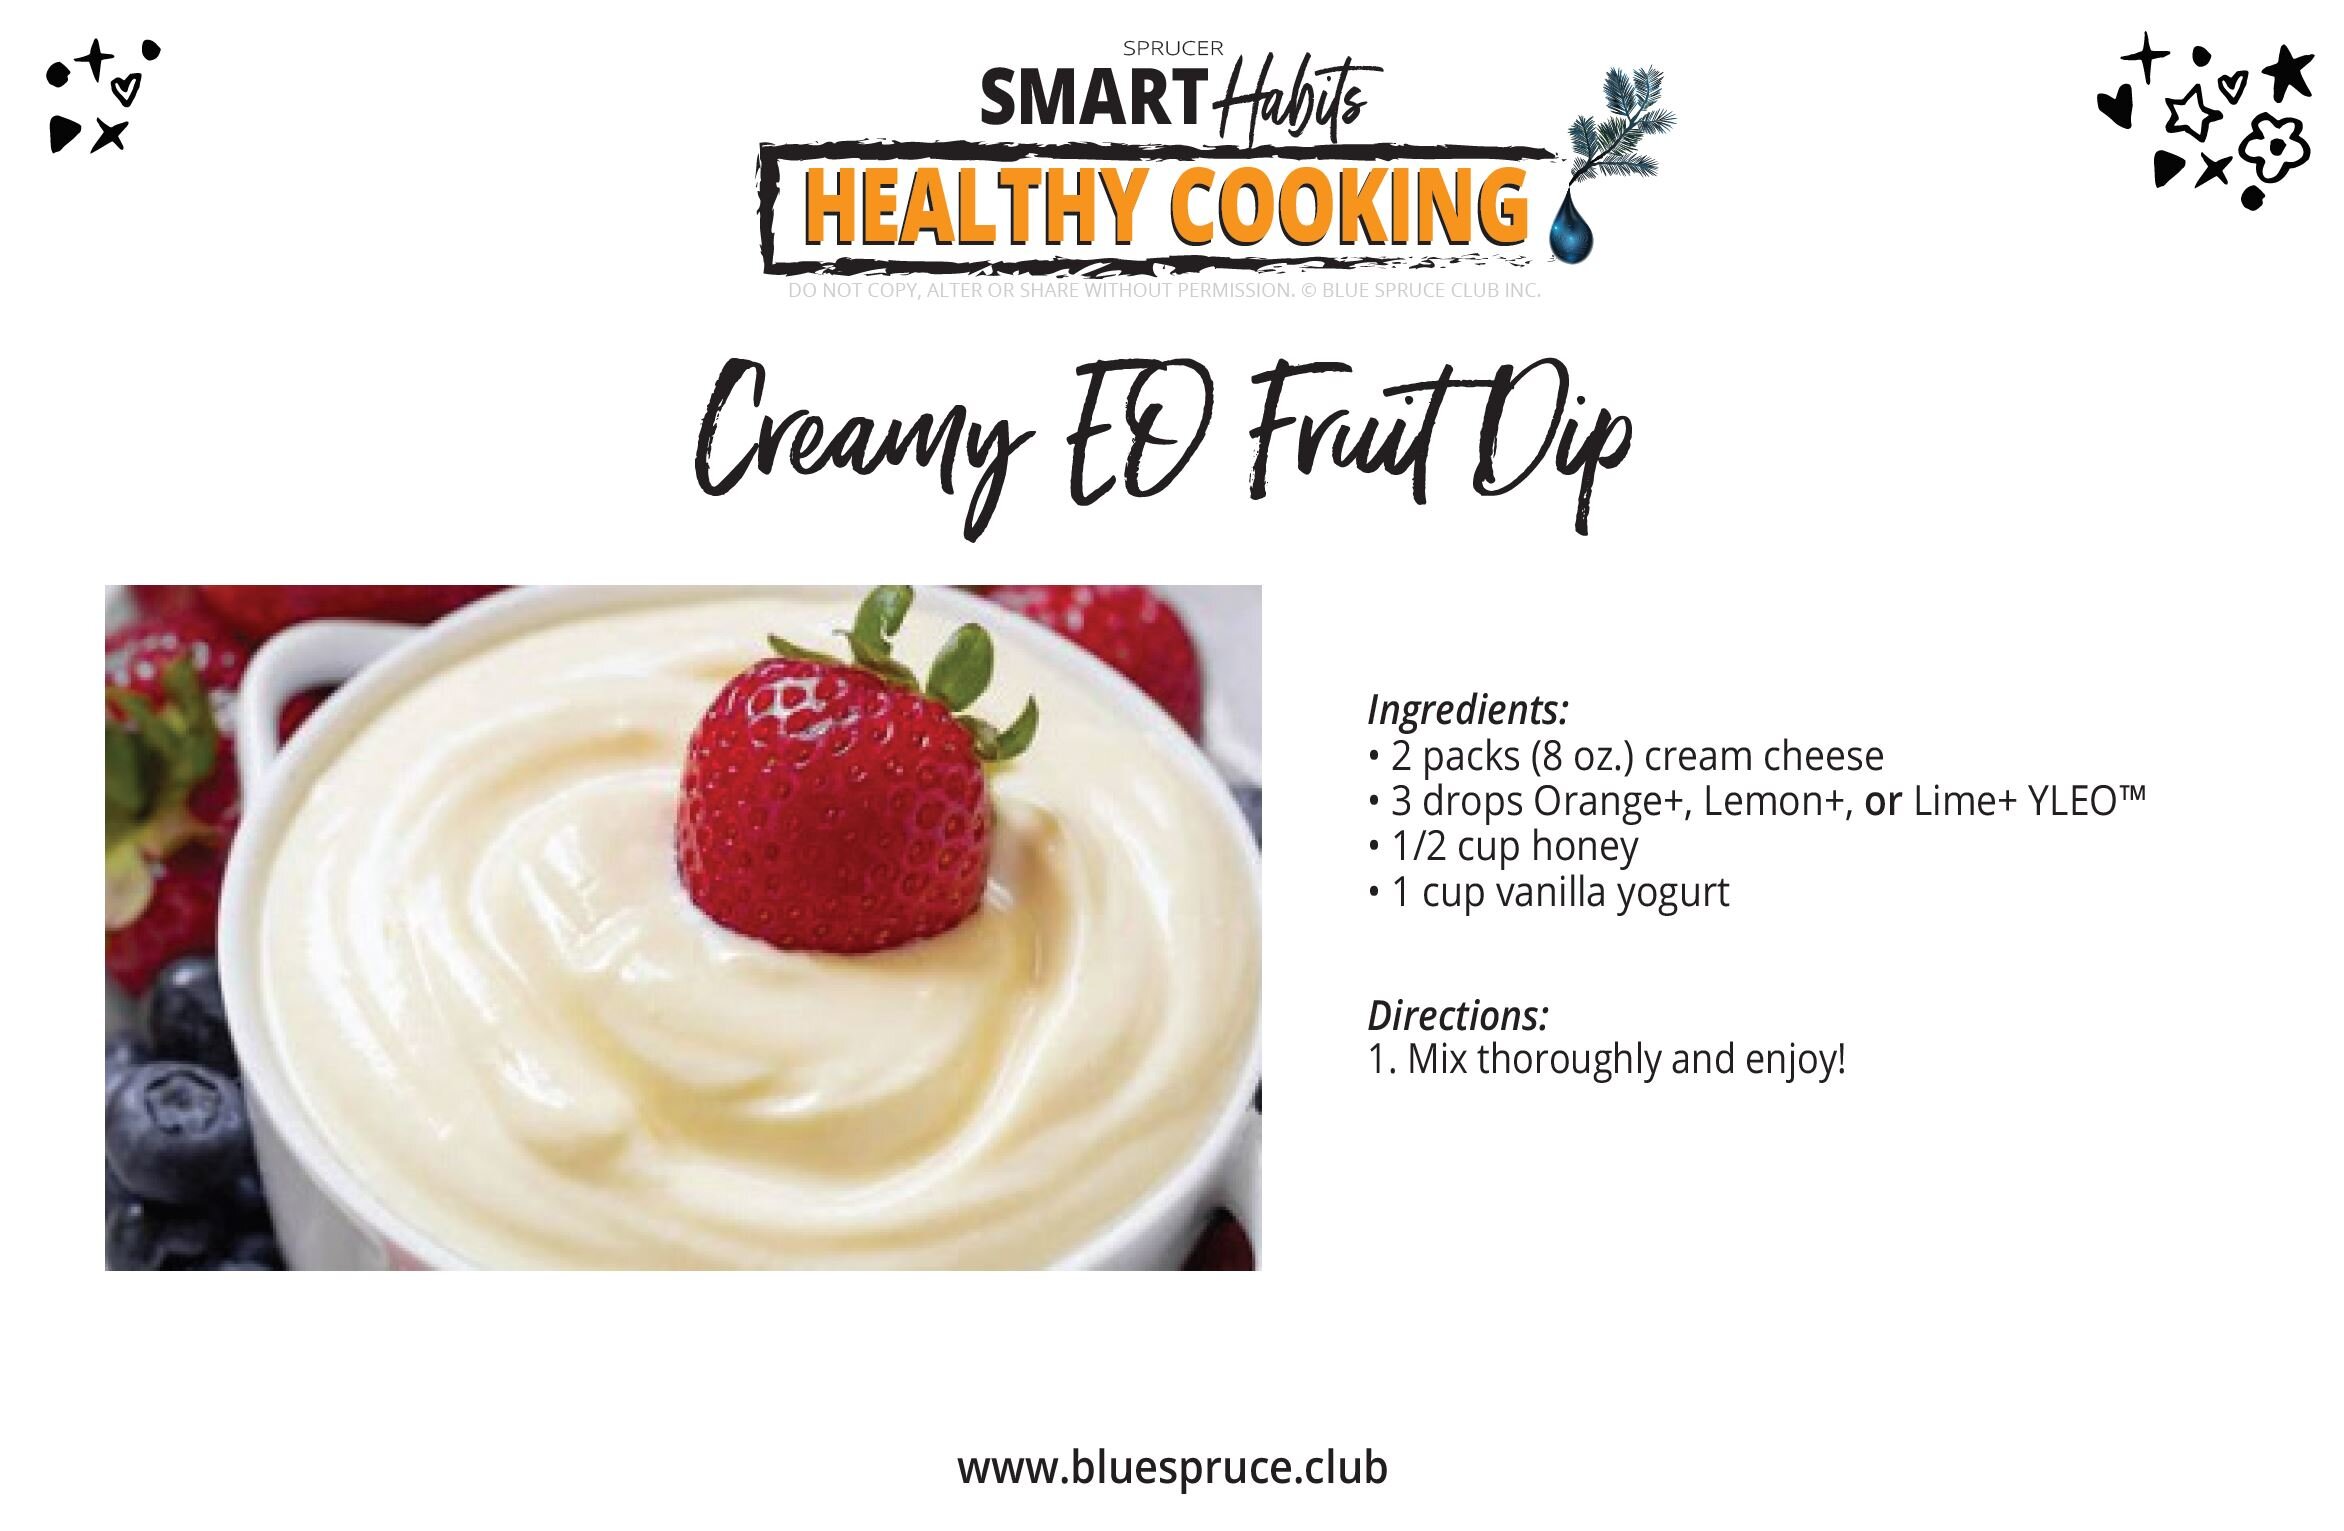 SMART HABITS_Healthy Cooking_Creamy Fruit Dip Recipe.JPG